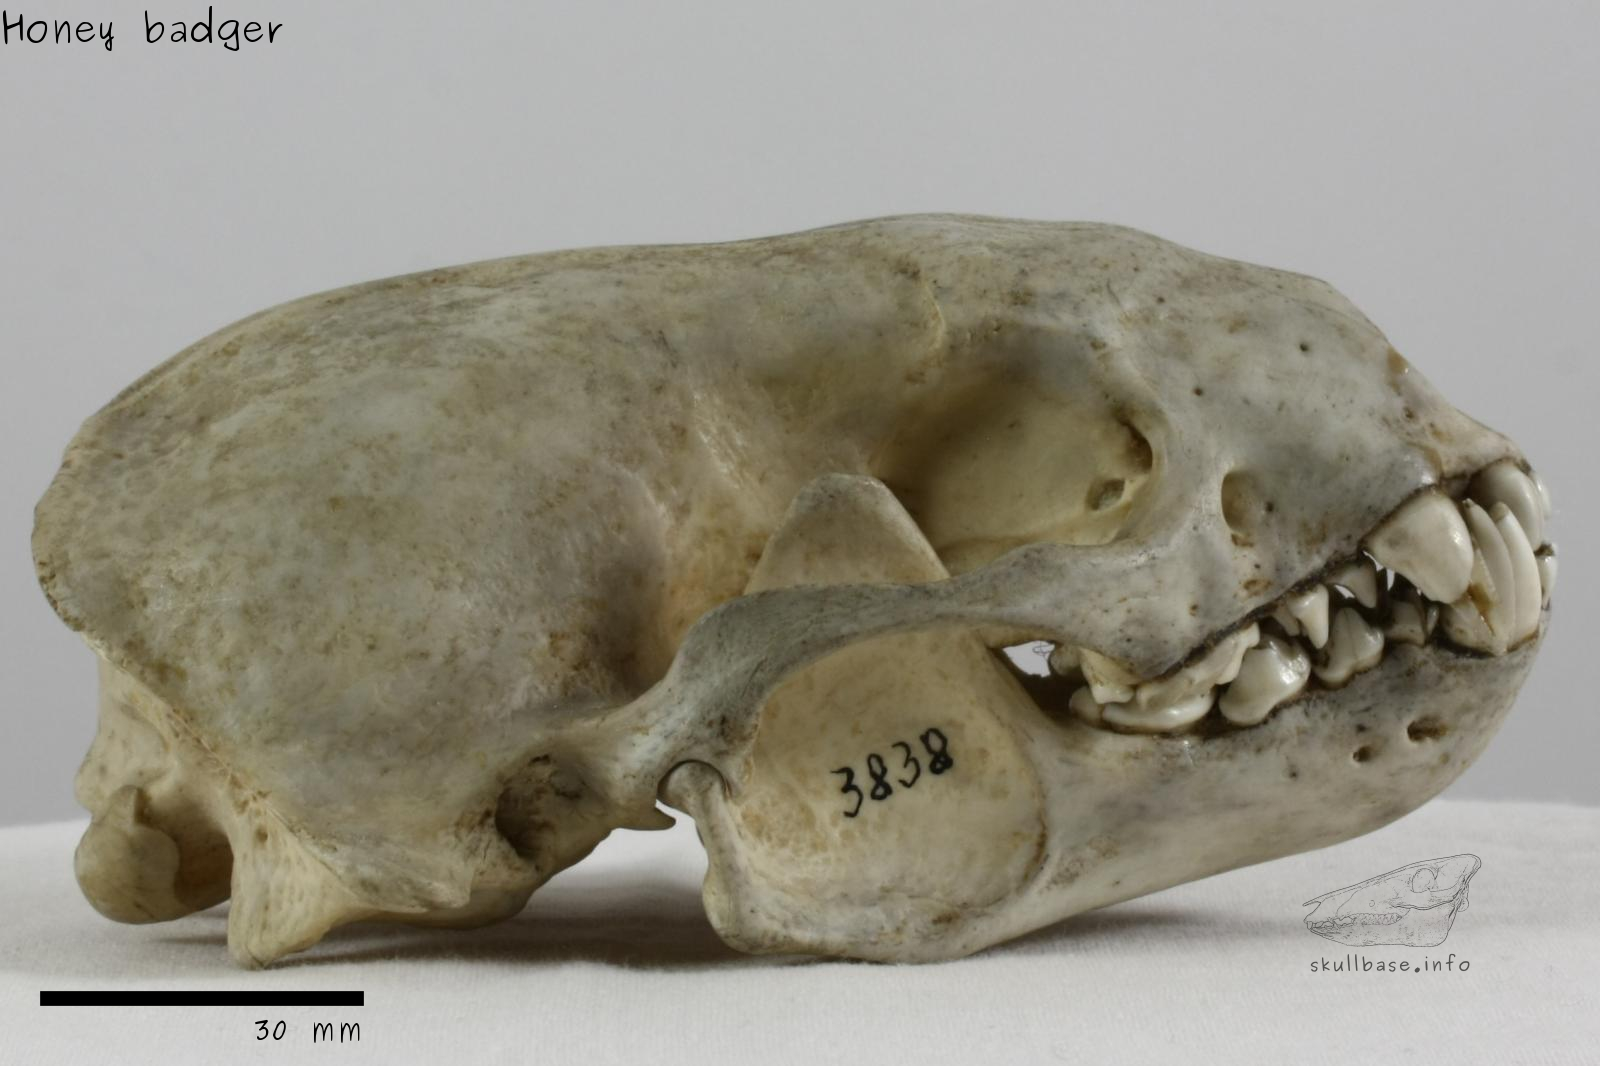 Honey badger (Mellivora capensis) skull lateral view